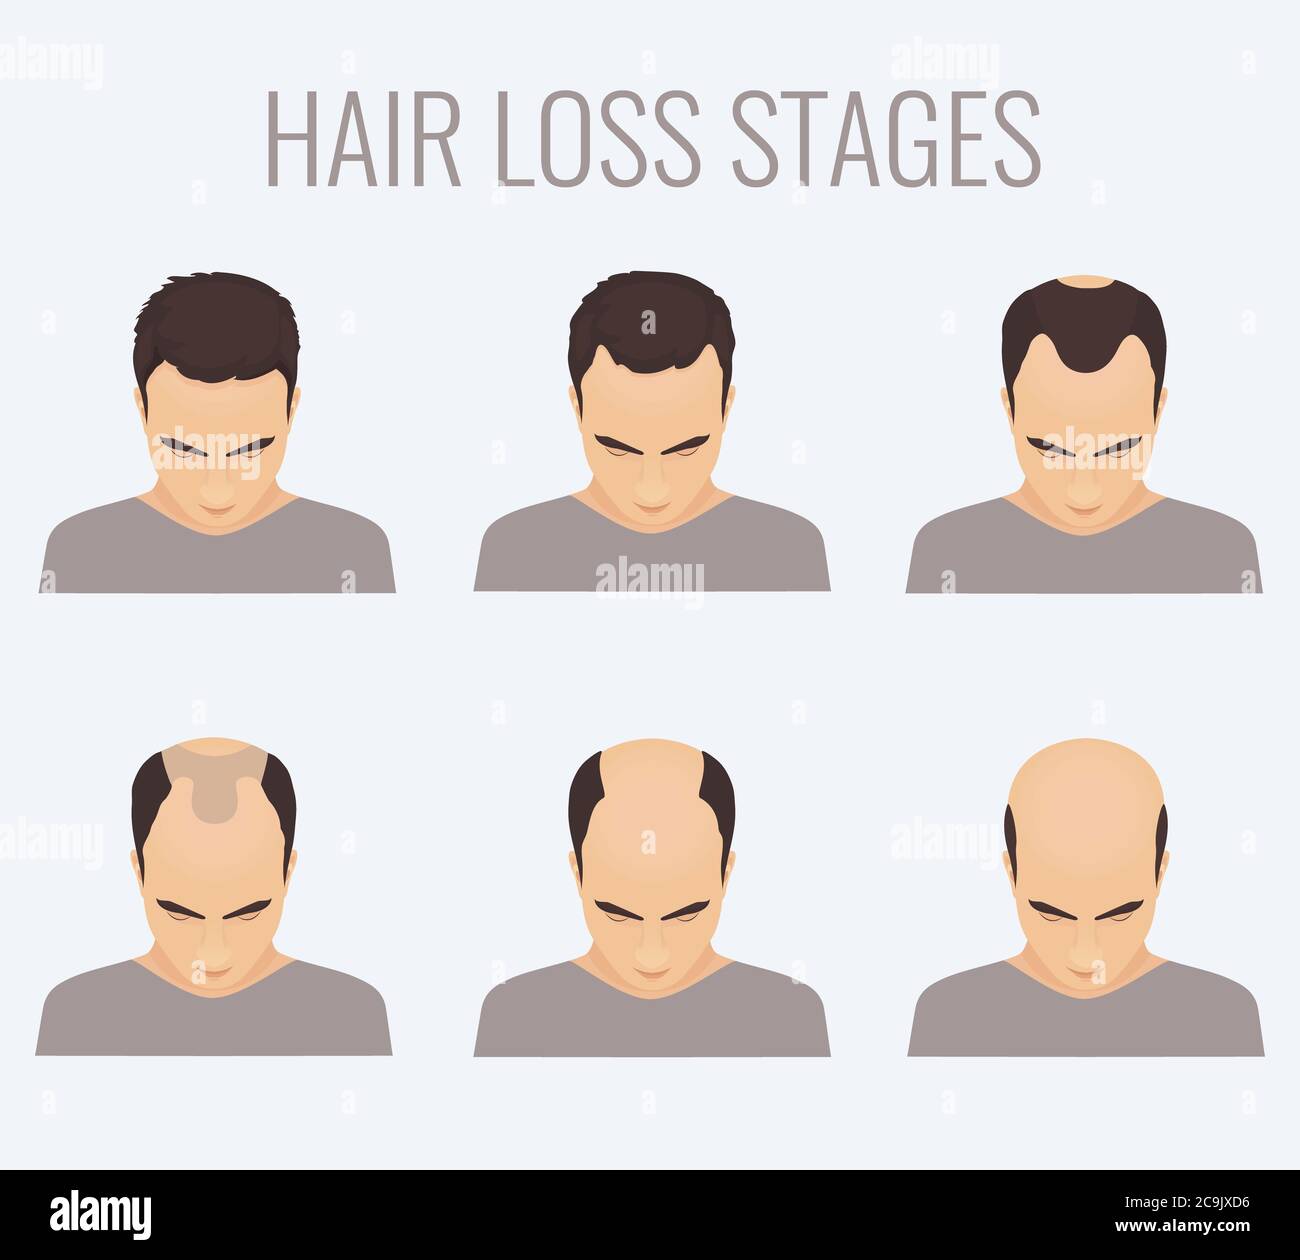 Male-pattern baldness stages, illustration Stock Photo - Alamy